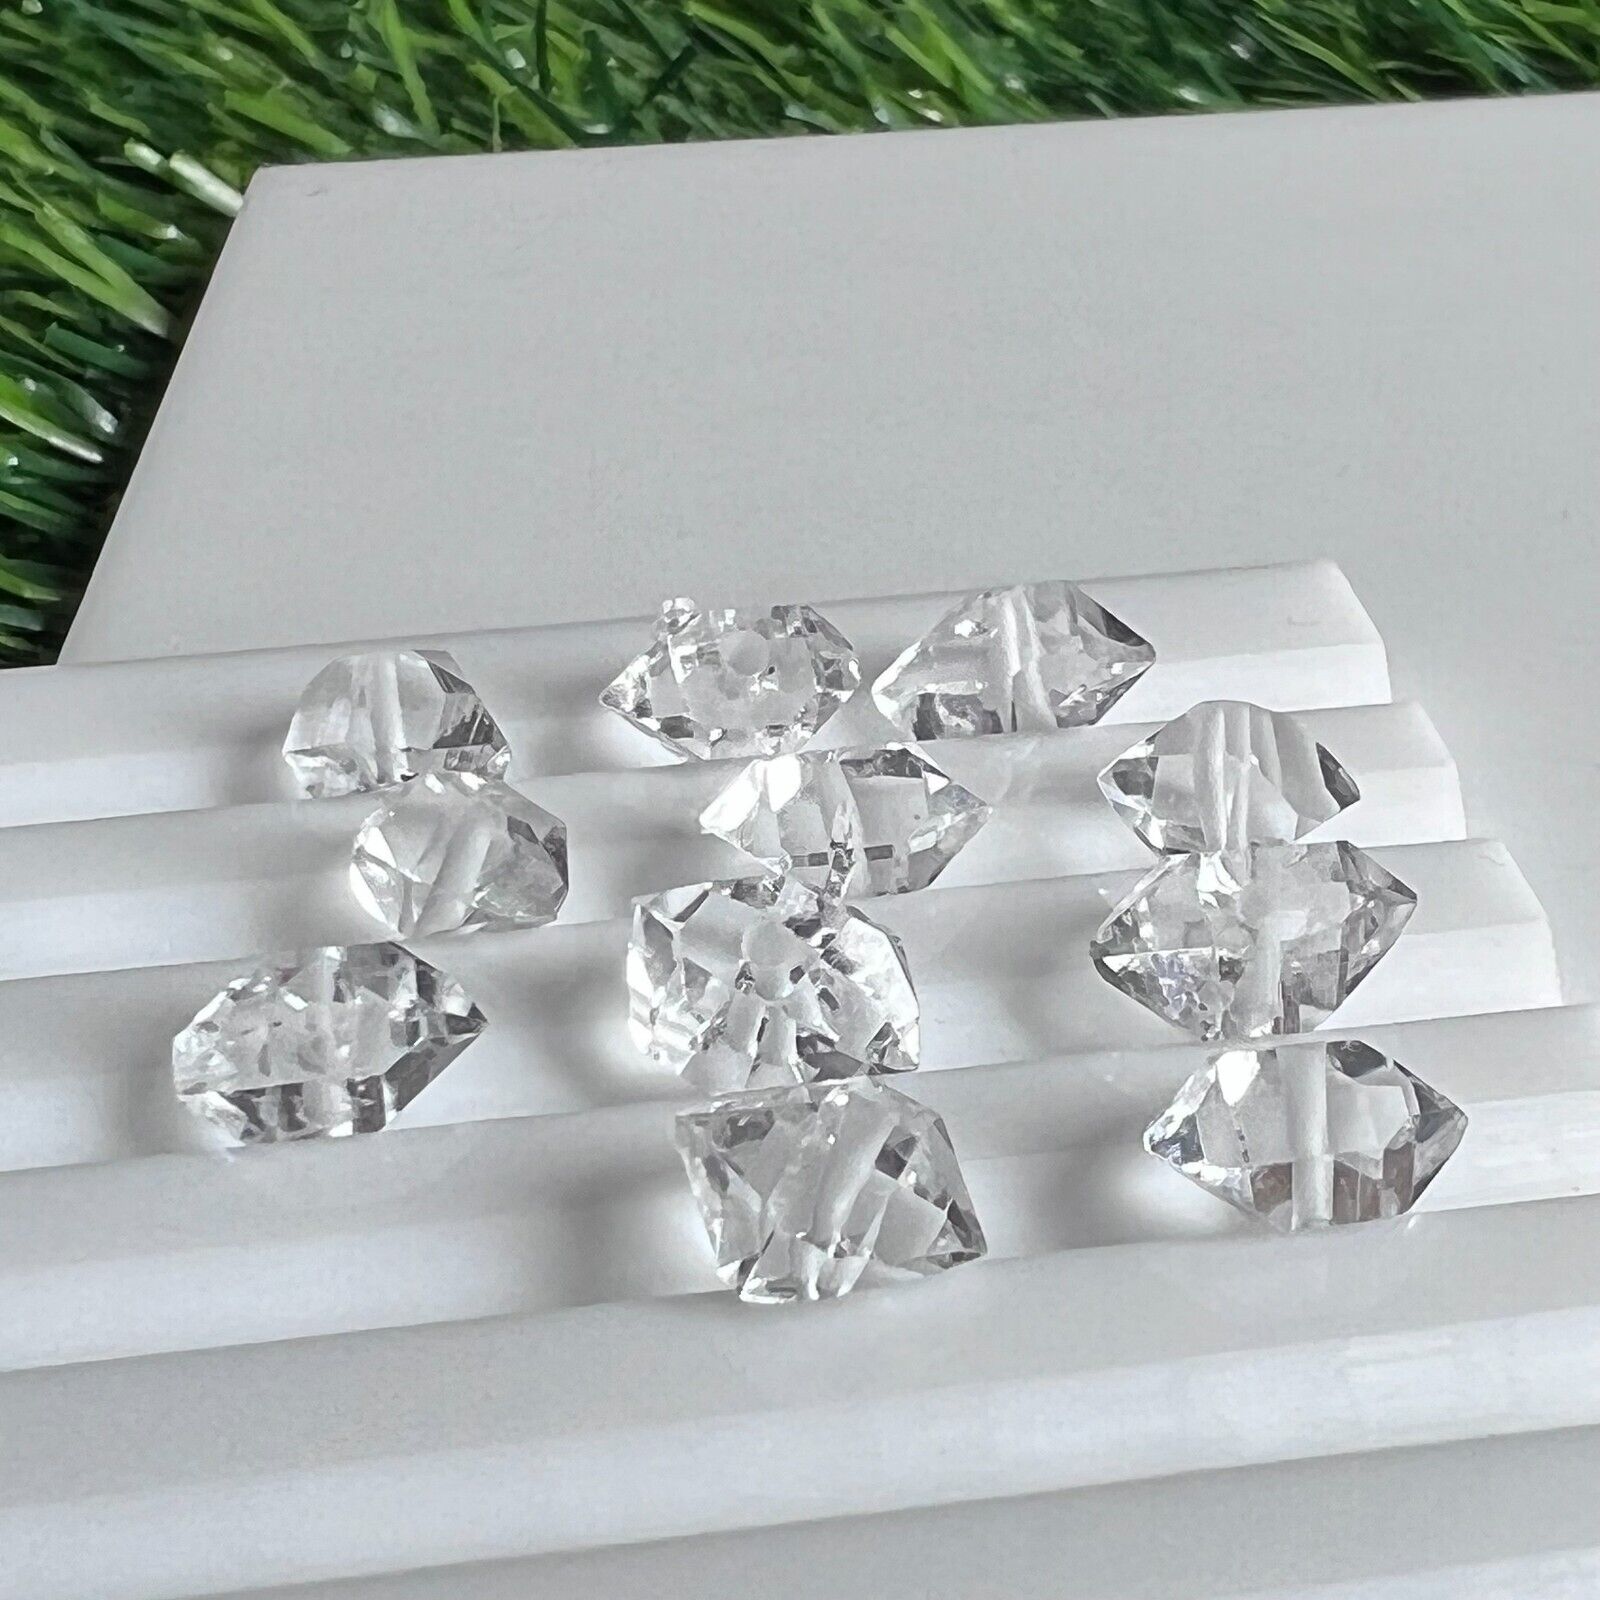 8 pcs  Drilled Herkimer diamond crystals 7mm - 9mm